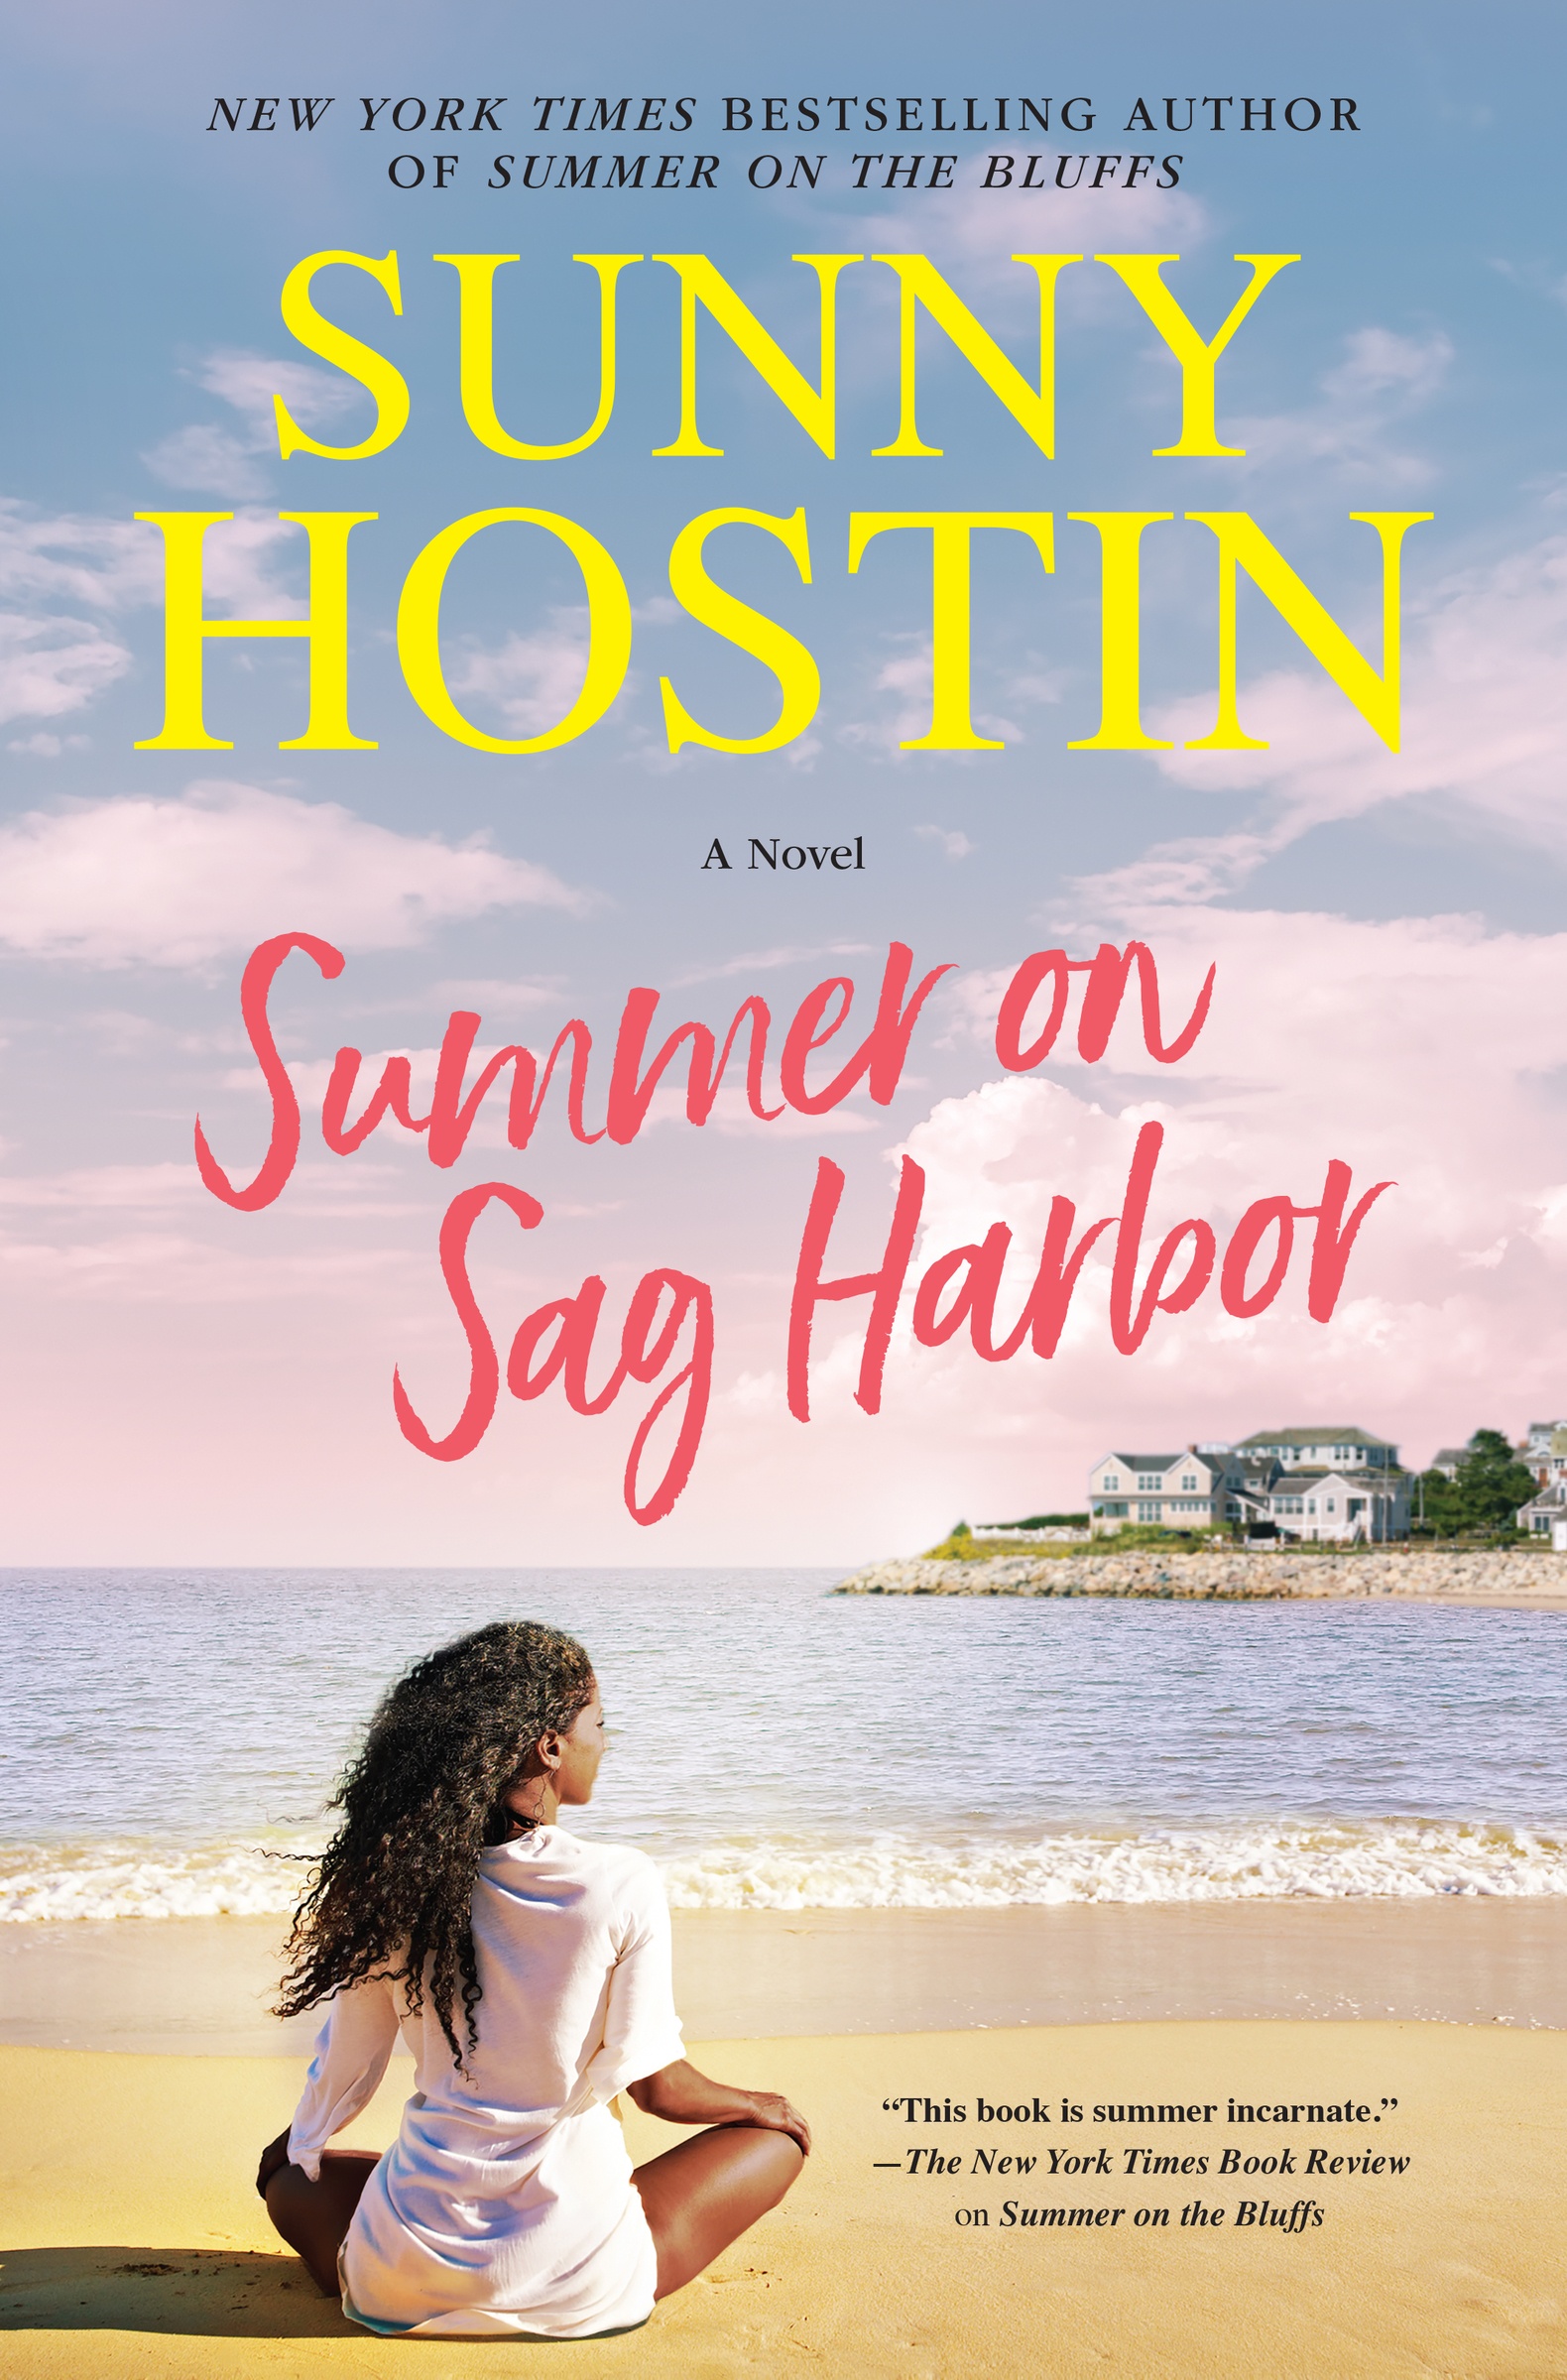 Summer on Sag Harbor cover image